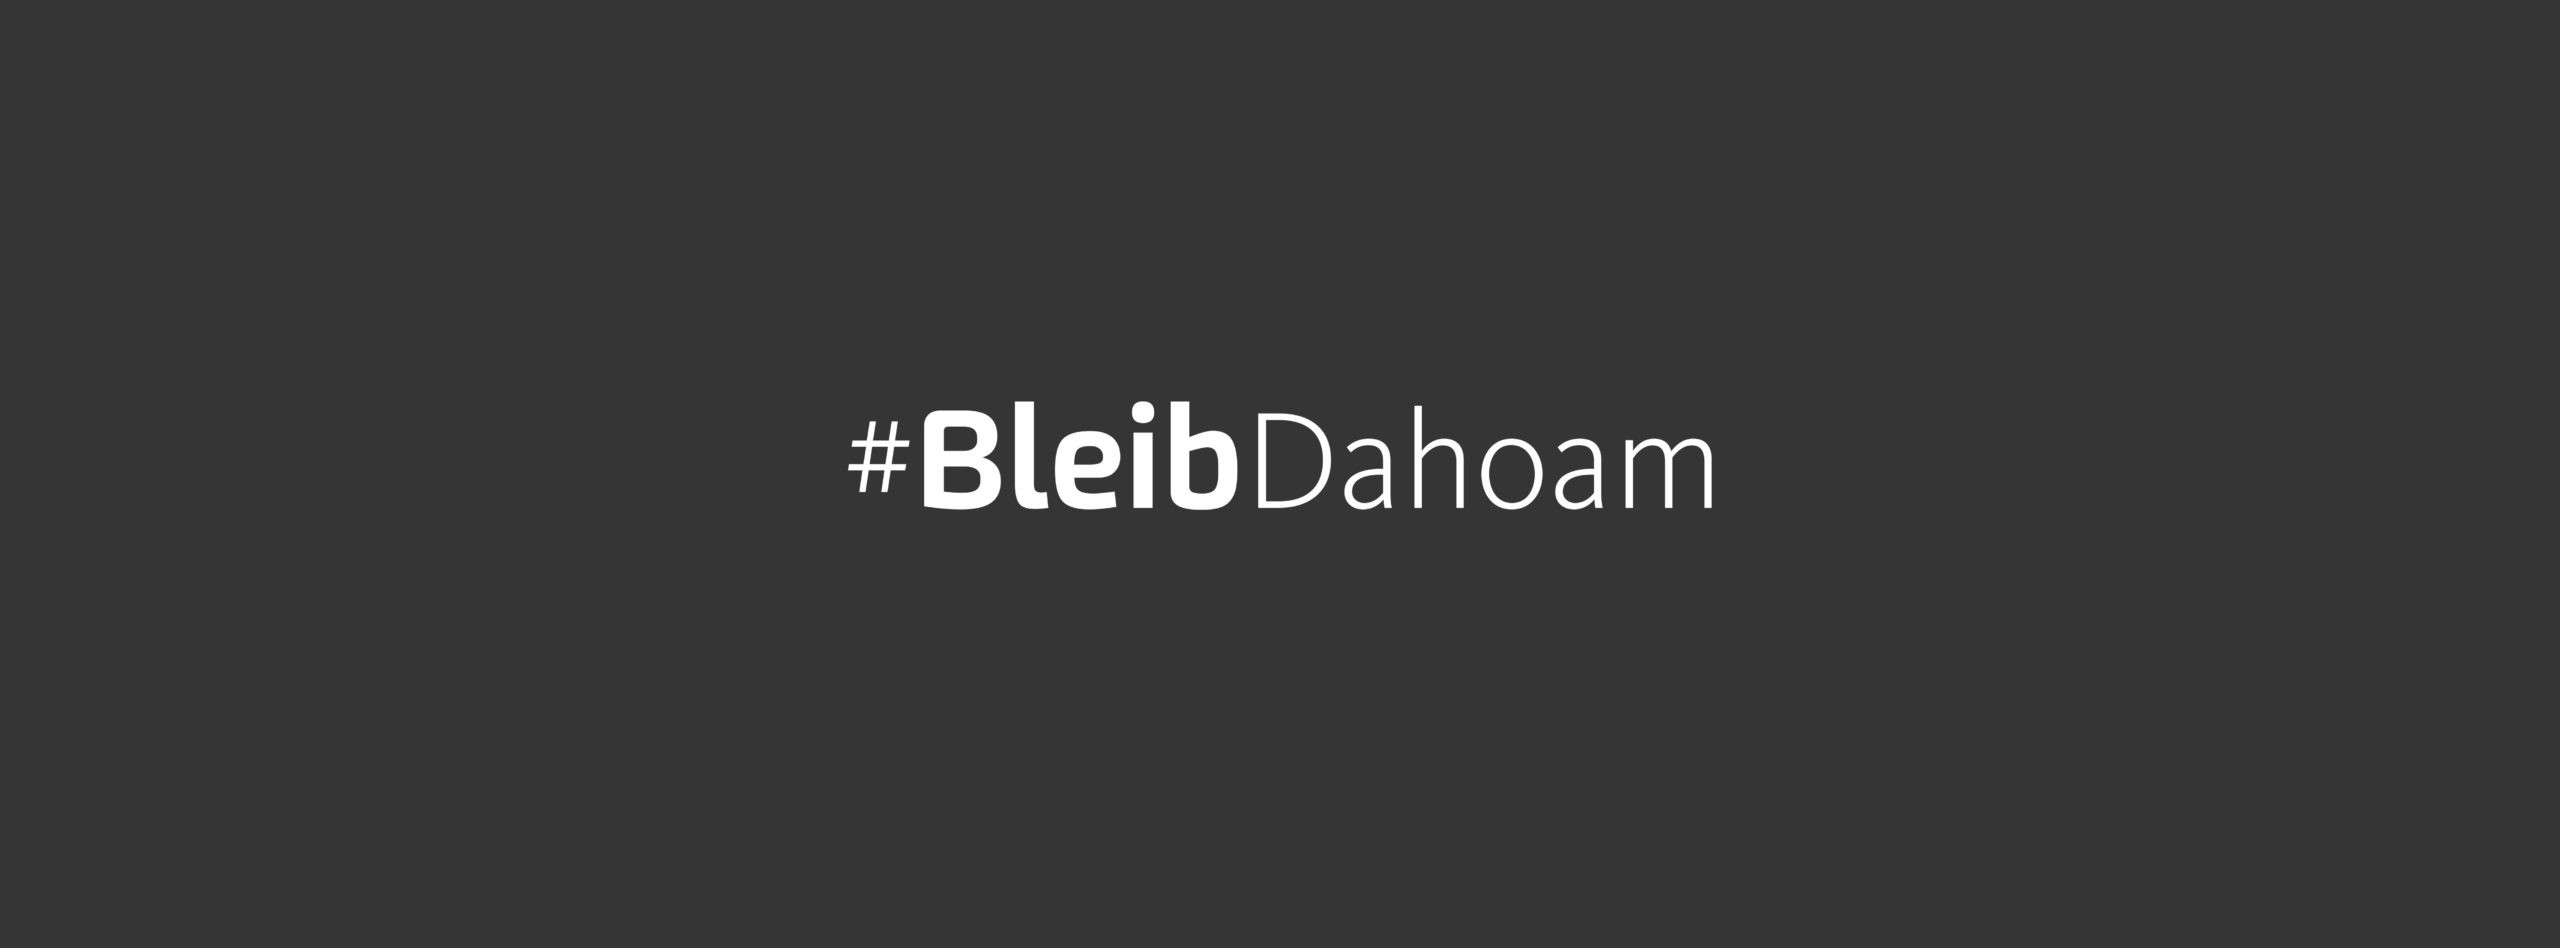 BleibDahoam - Lockdown Devise